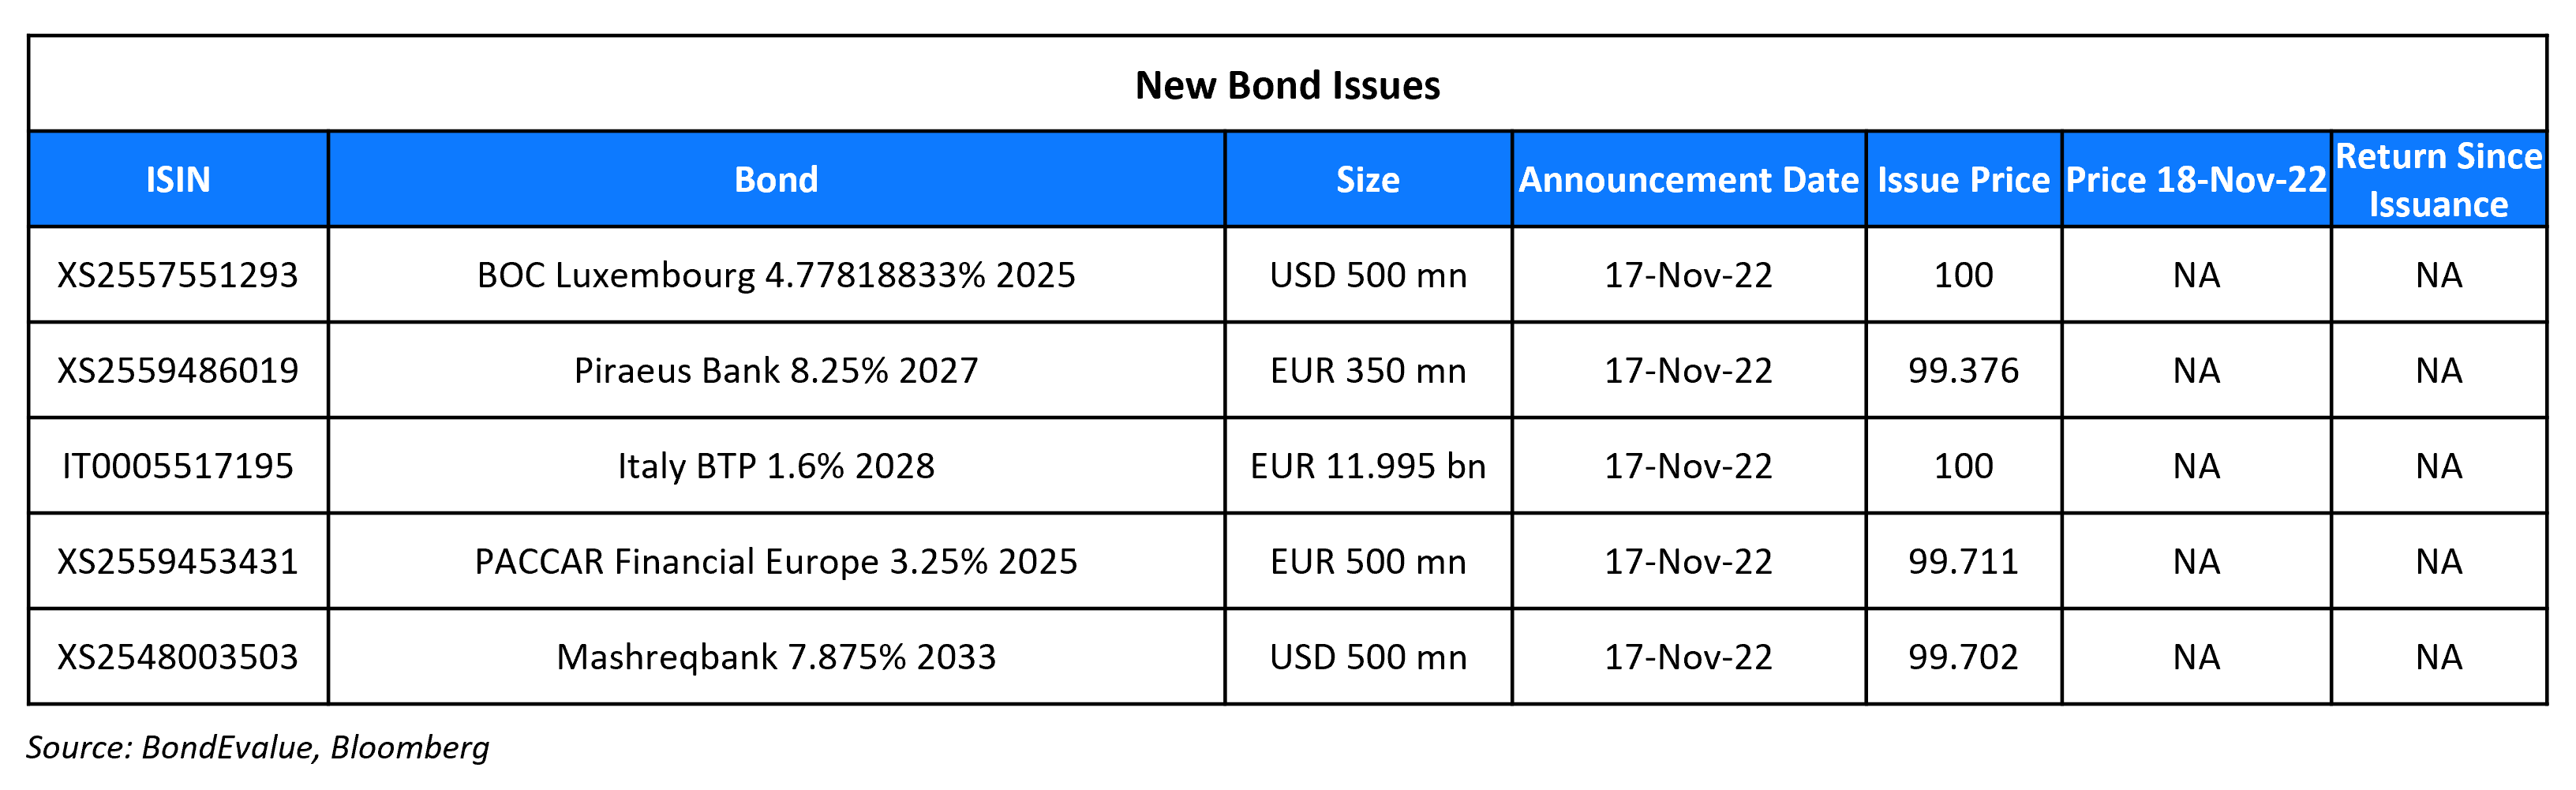 New Bond Issues 18 Nov 22